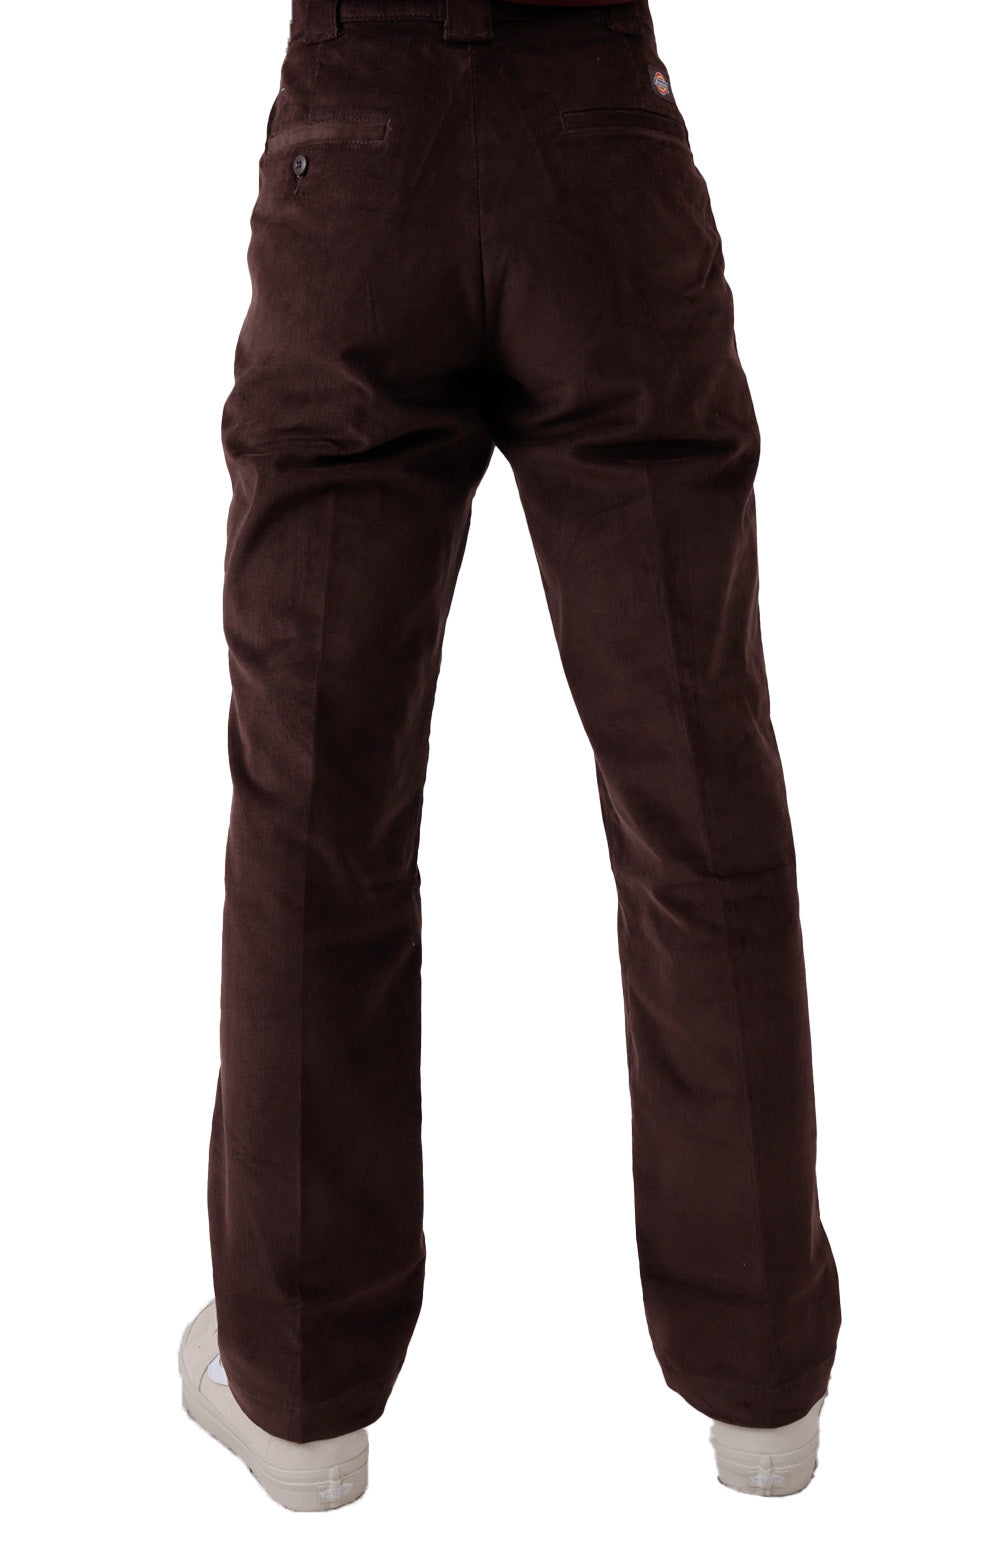 (WPR22CB) Flat Front Corduroy Pants - Chocolate Brown